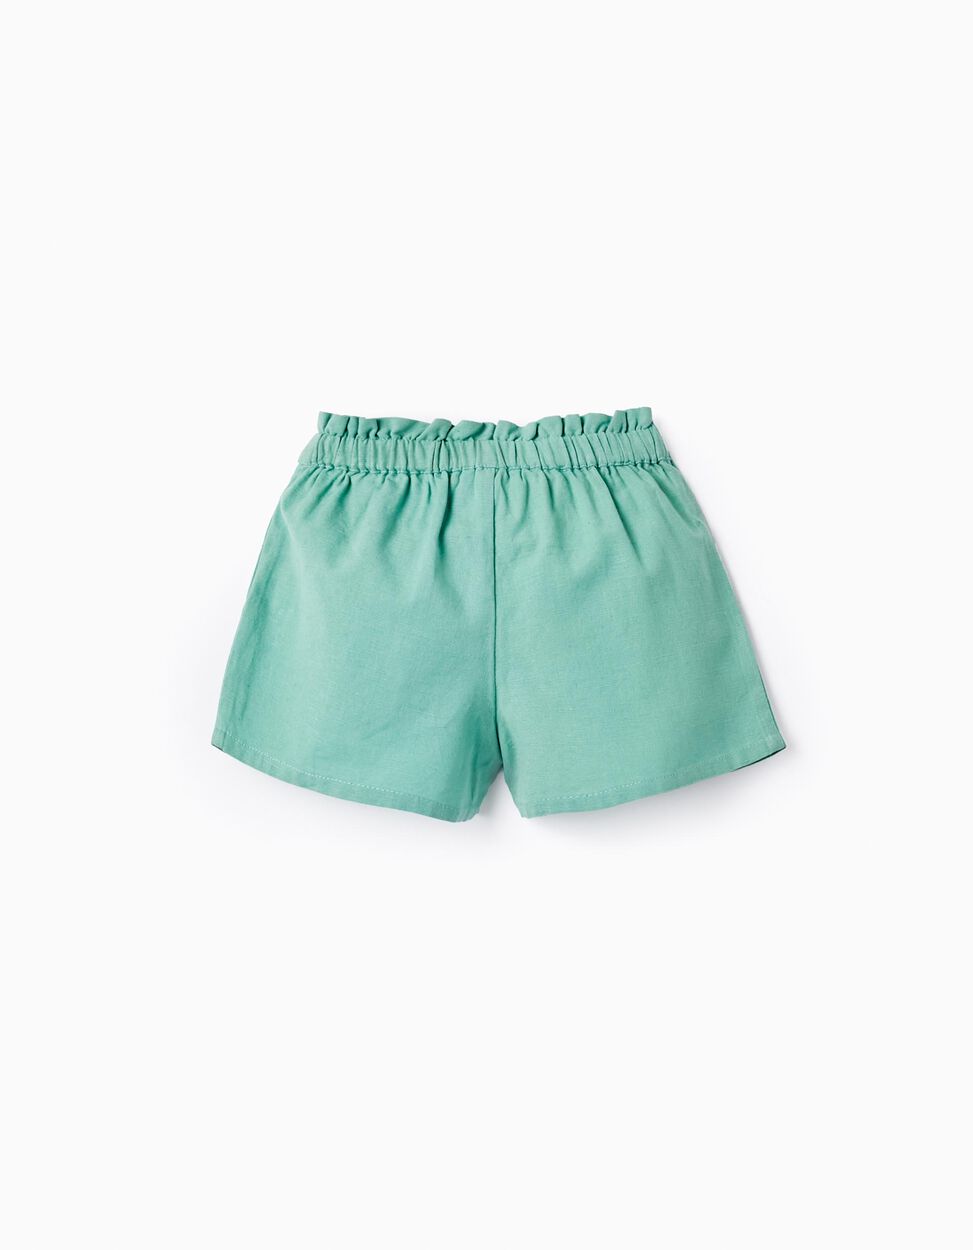 Buy Online Linen Shorts for Baby Girls 'B&S', Green